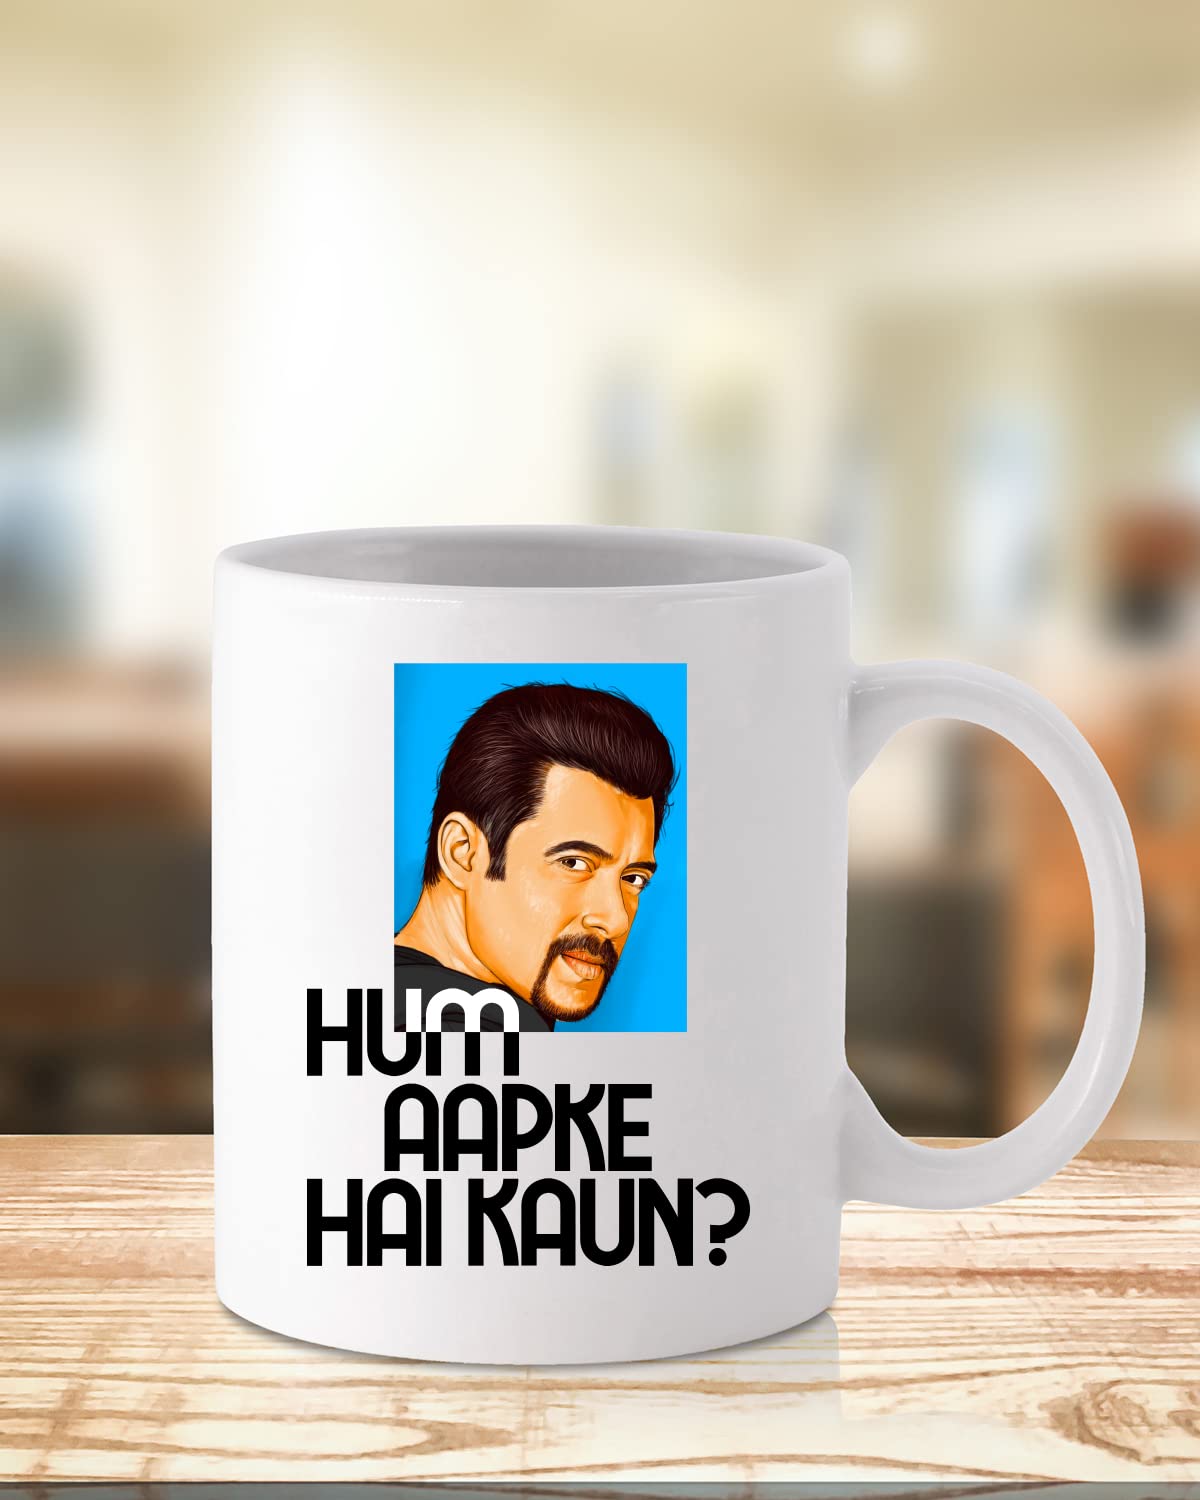 HUM APKE HAIN KAUN Coffee Mug - Gift for Friend, Birthday Gift, Birthday Mug, Motivational Quotes Mug, Mugs with Funny & Funky Dialogues, Bollywood Mugs, Funny Mugs for Him & Her